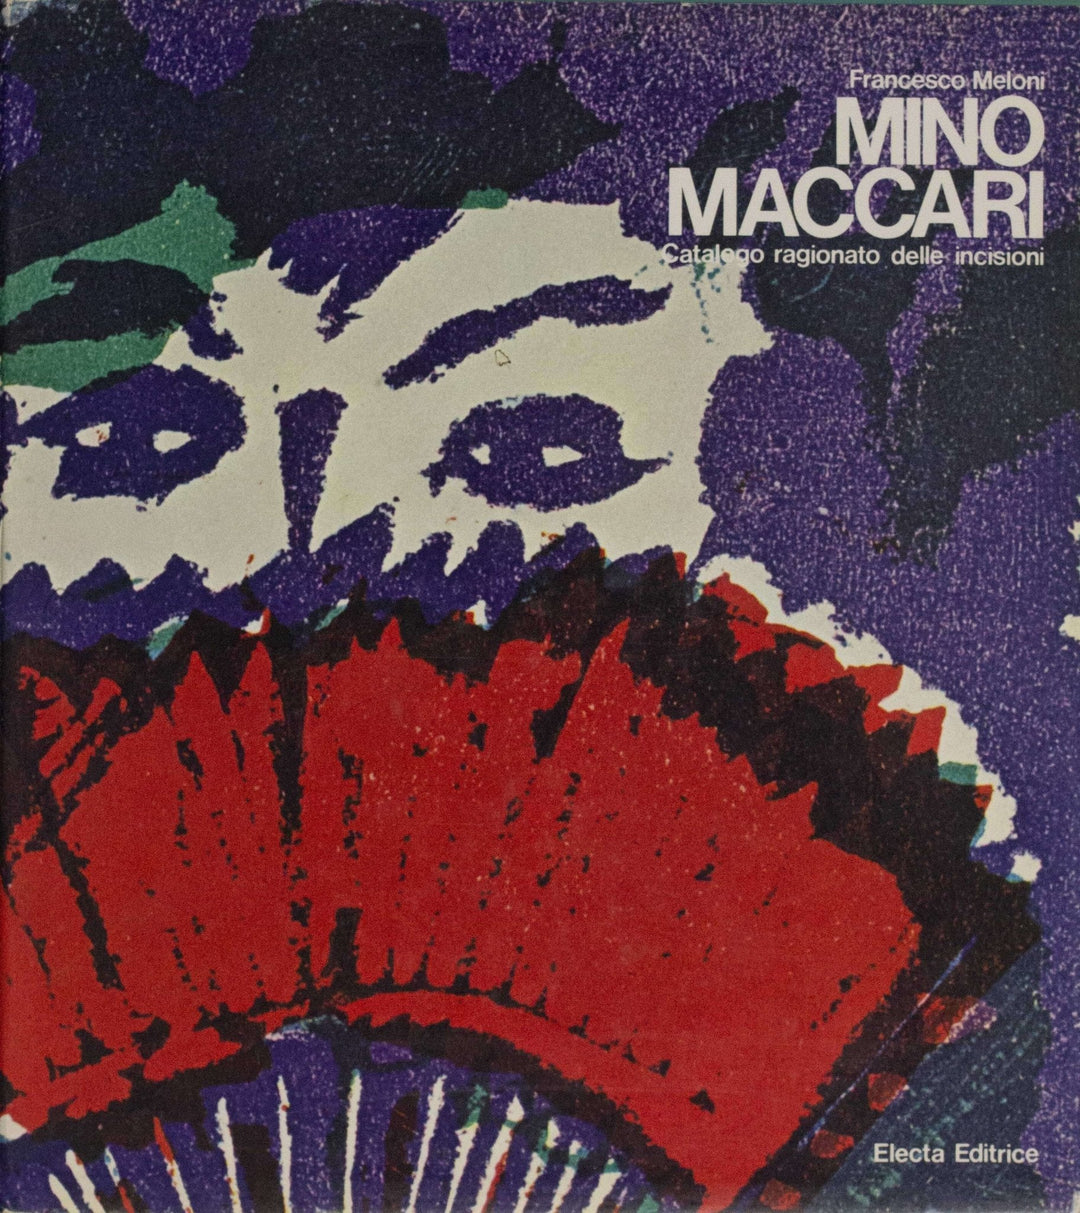 MACCARI Mino, Maccari Gravures, 1968, Linoleografia originale firmata - EmporiumArt